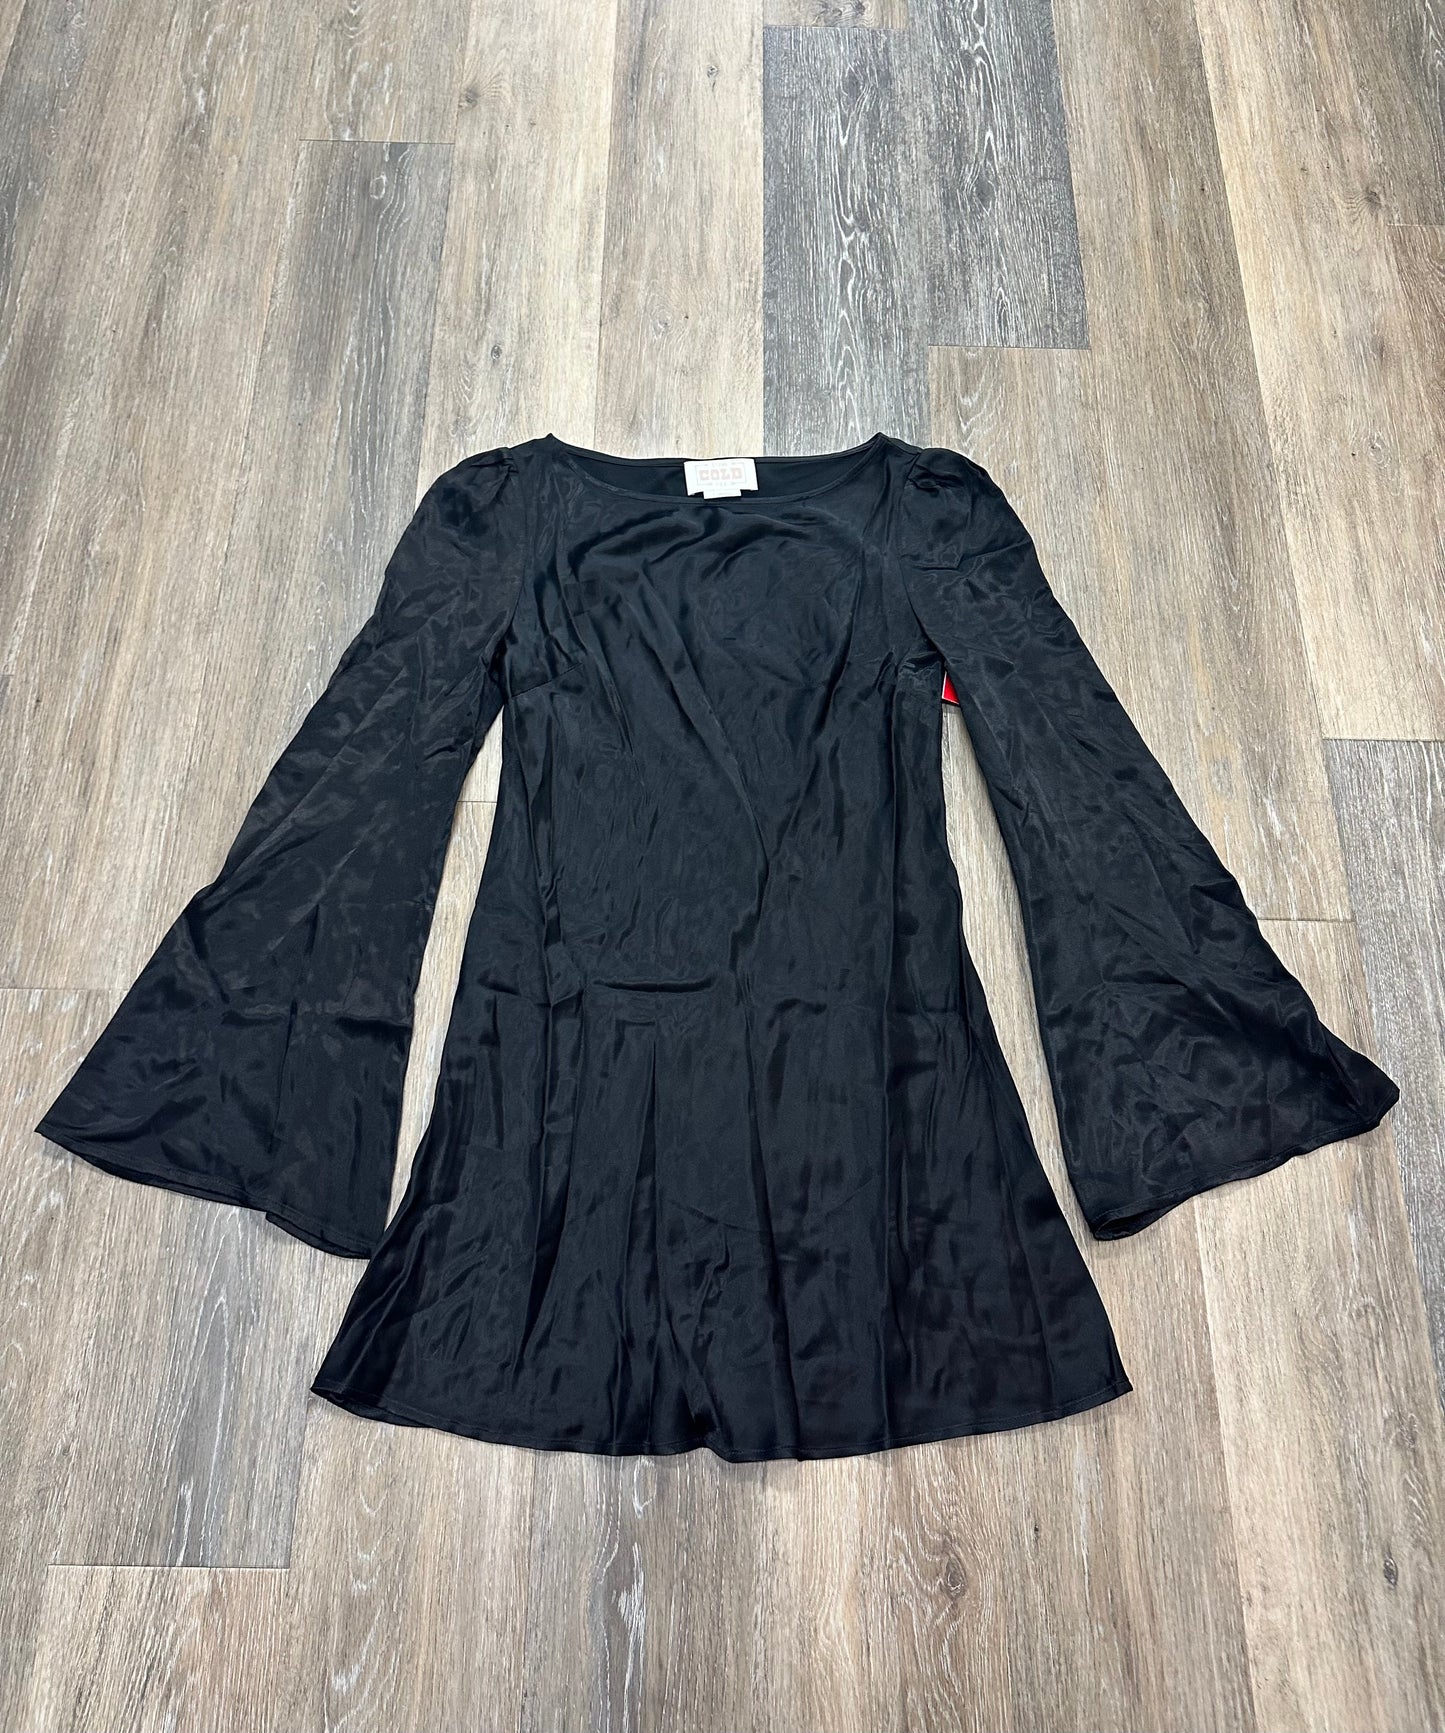 Black Dress Designer Stone Cold Fox, Size S